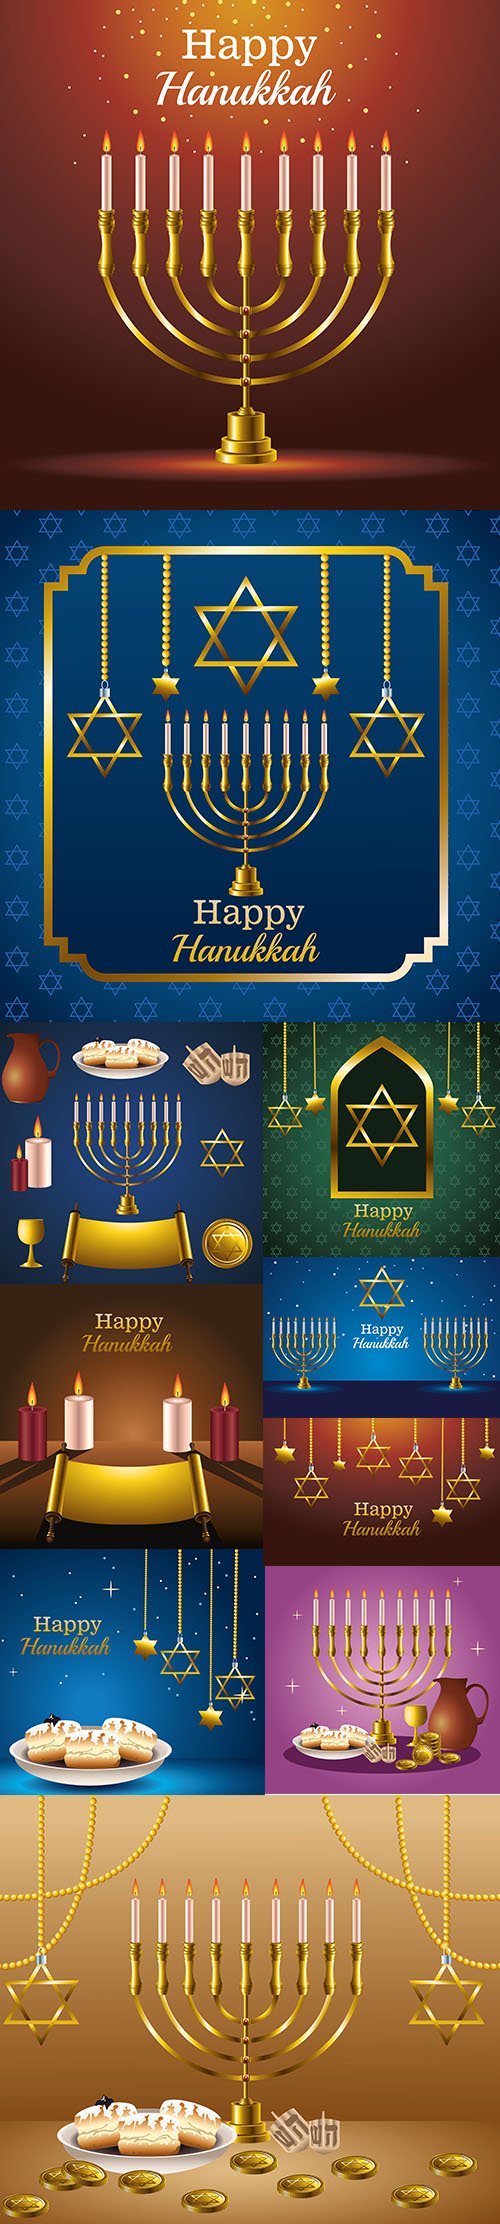 Happy hanukkah celebration card with golden stars hanging vector illustration